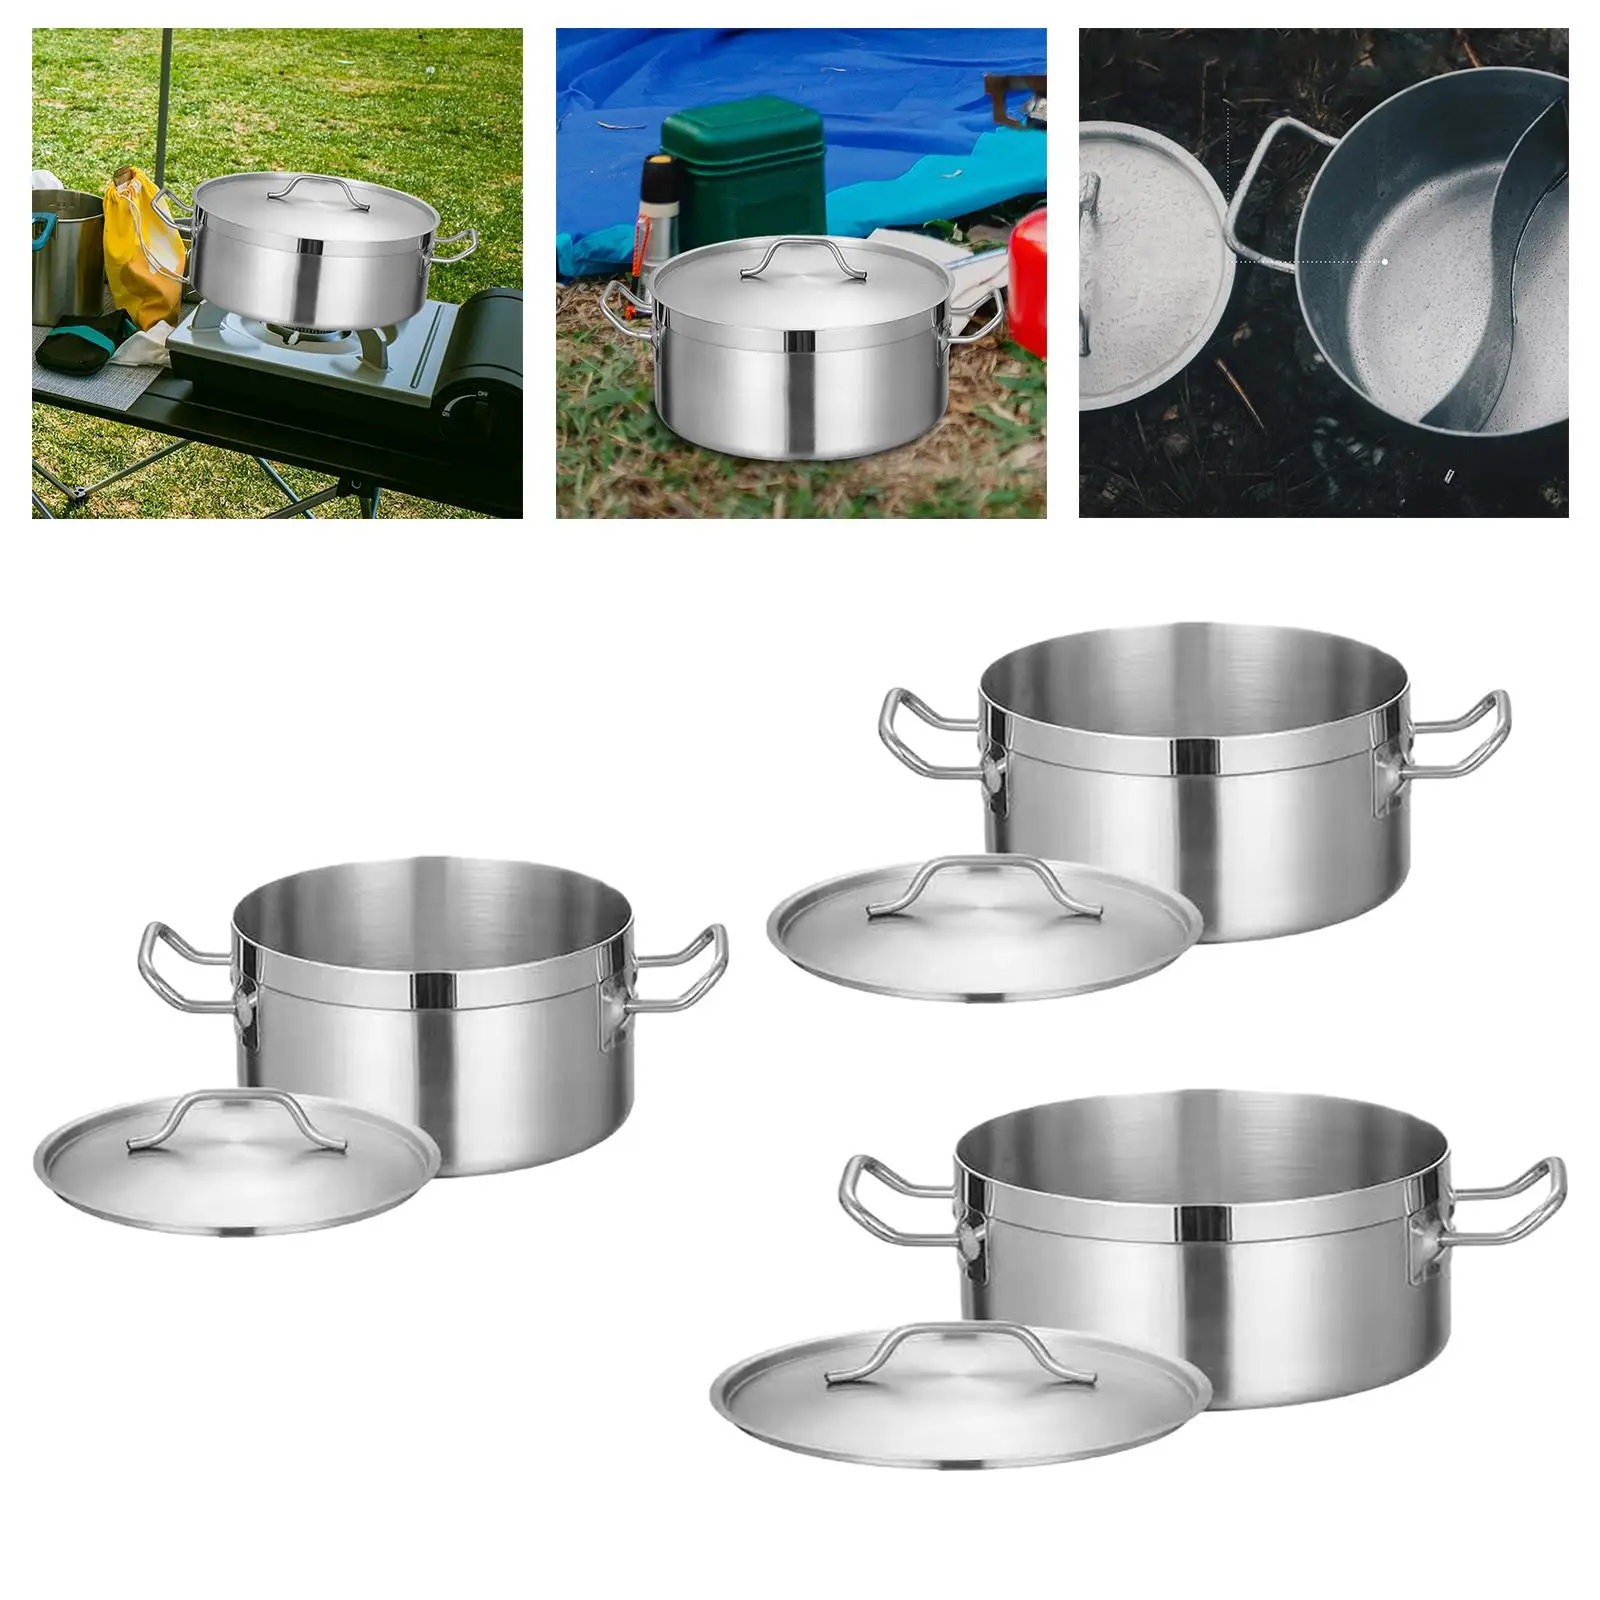 Stainless Steel Stockpot Cookware Deep Pot Stewing Pot Casserole Pot Cooking Pot Induction Pot for Commercial Outdoor Camping